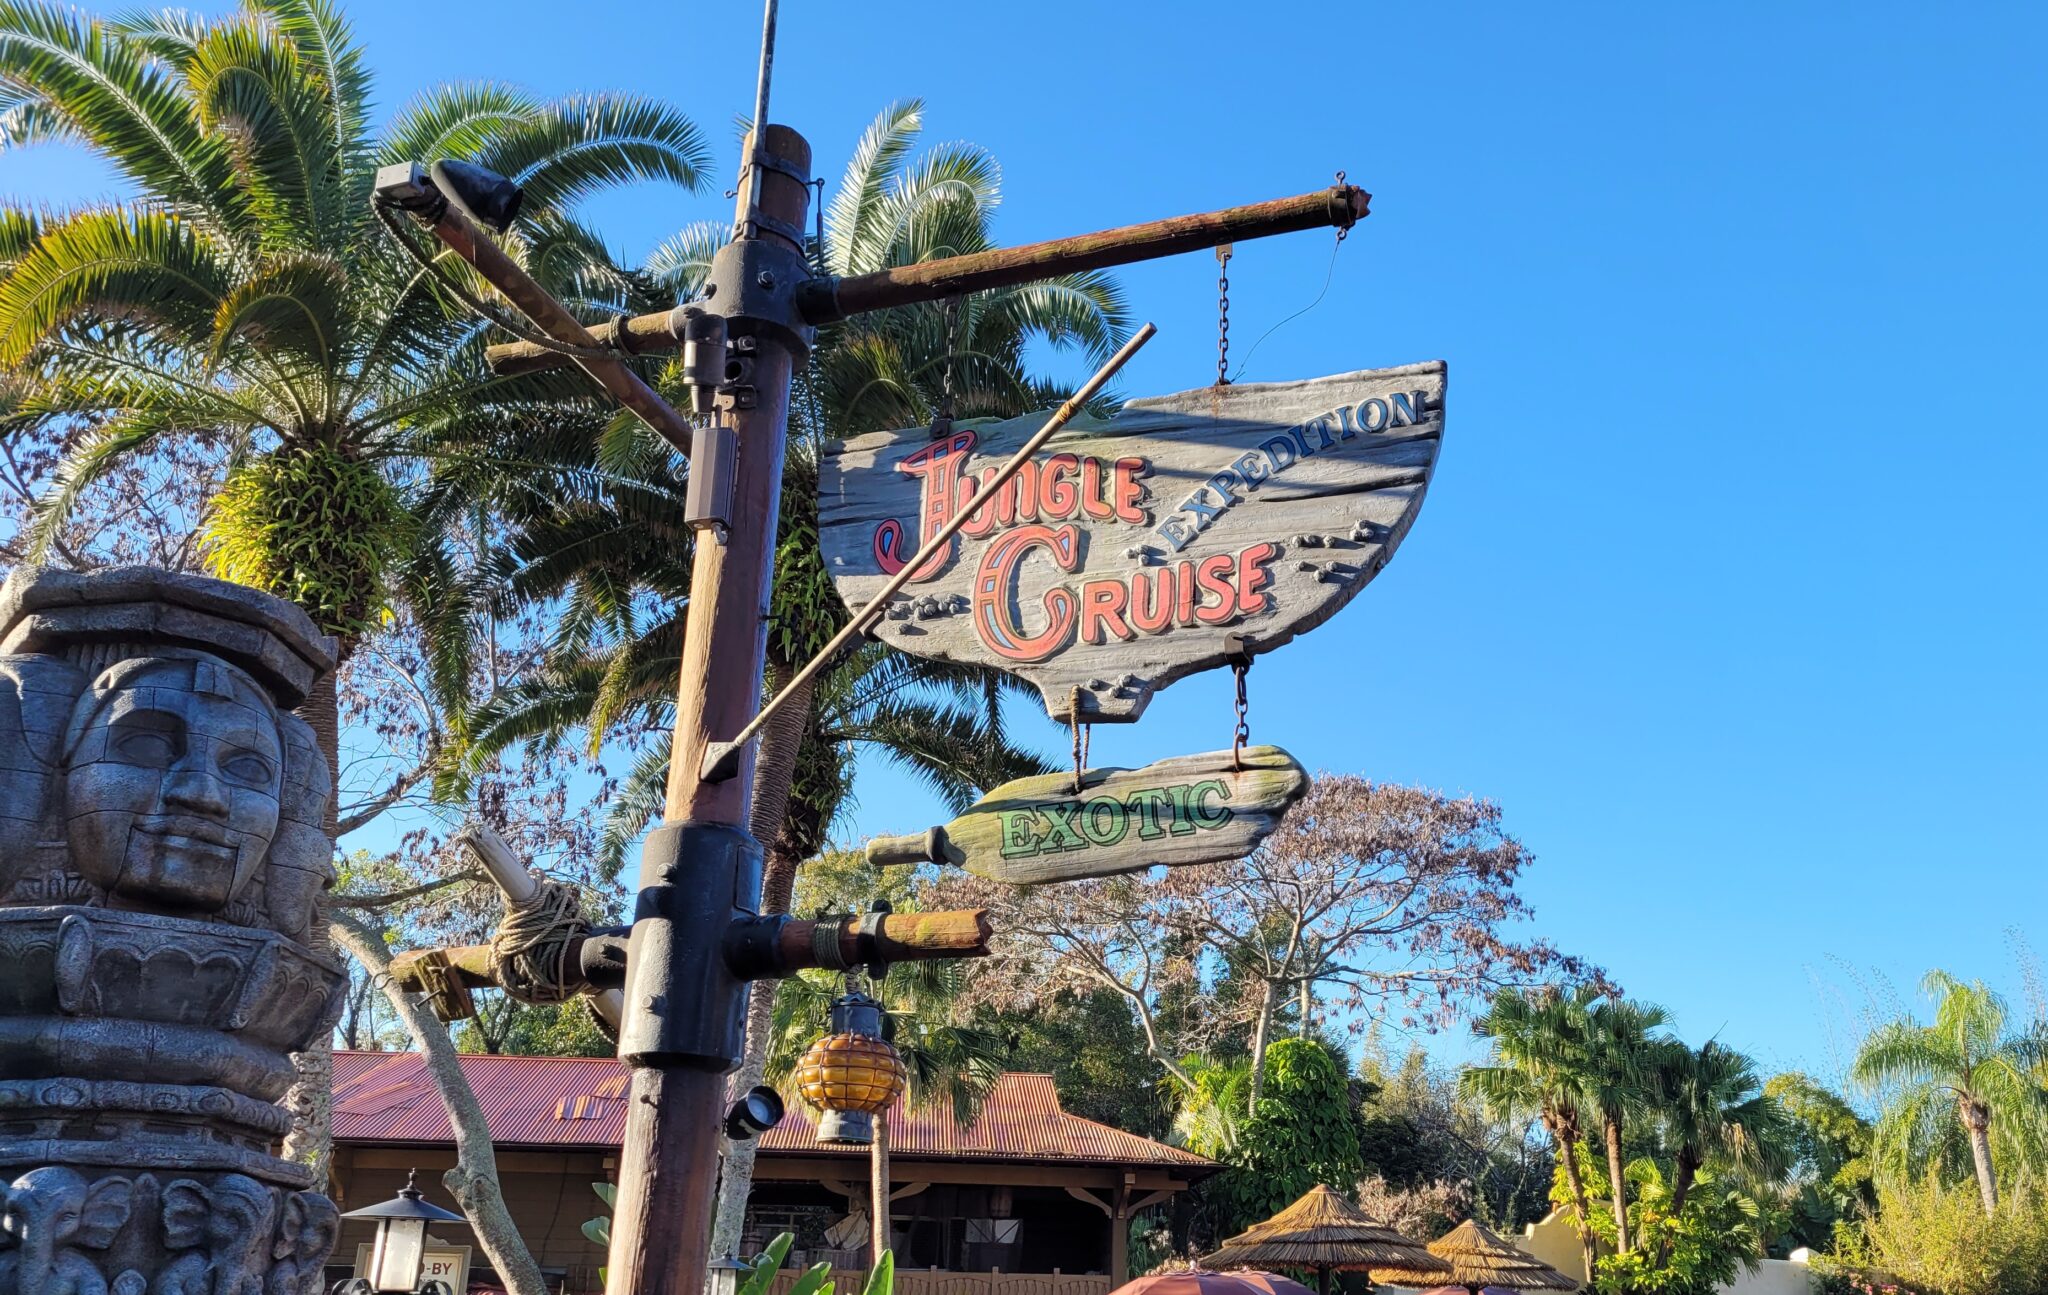 Jungle Cruise Overview | Disney's Magic Kingdom Attractions - DVC Shop